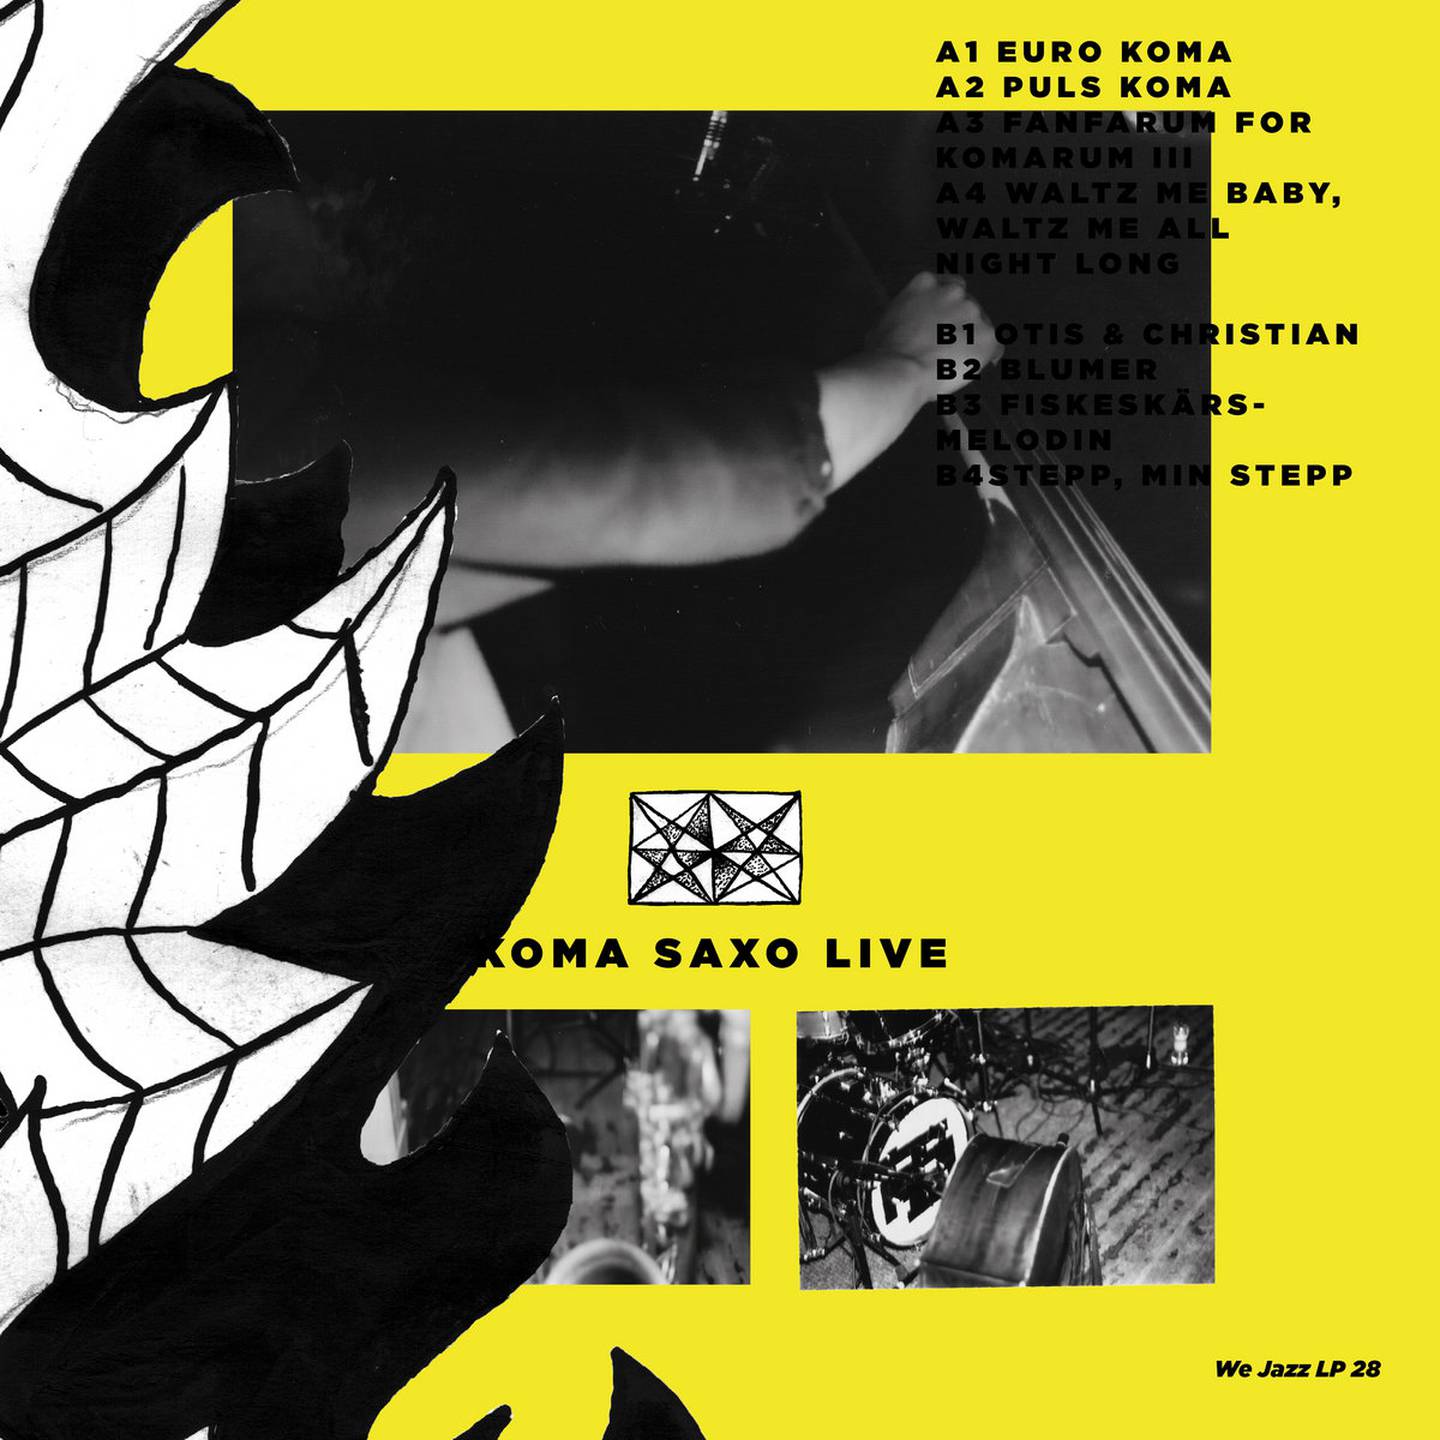 Koma Saxo: "Live"